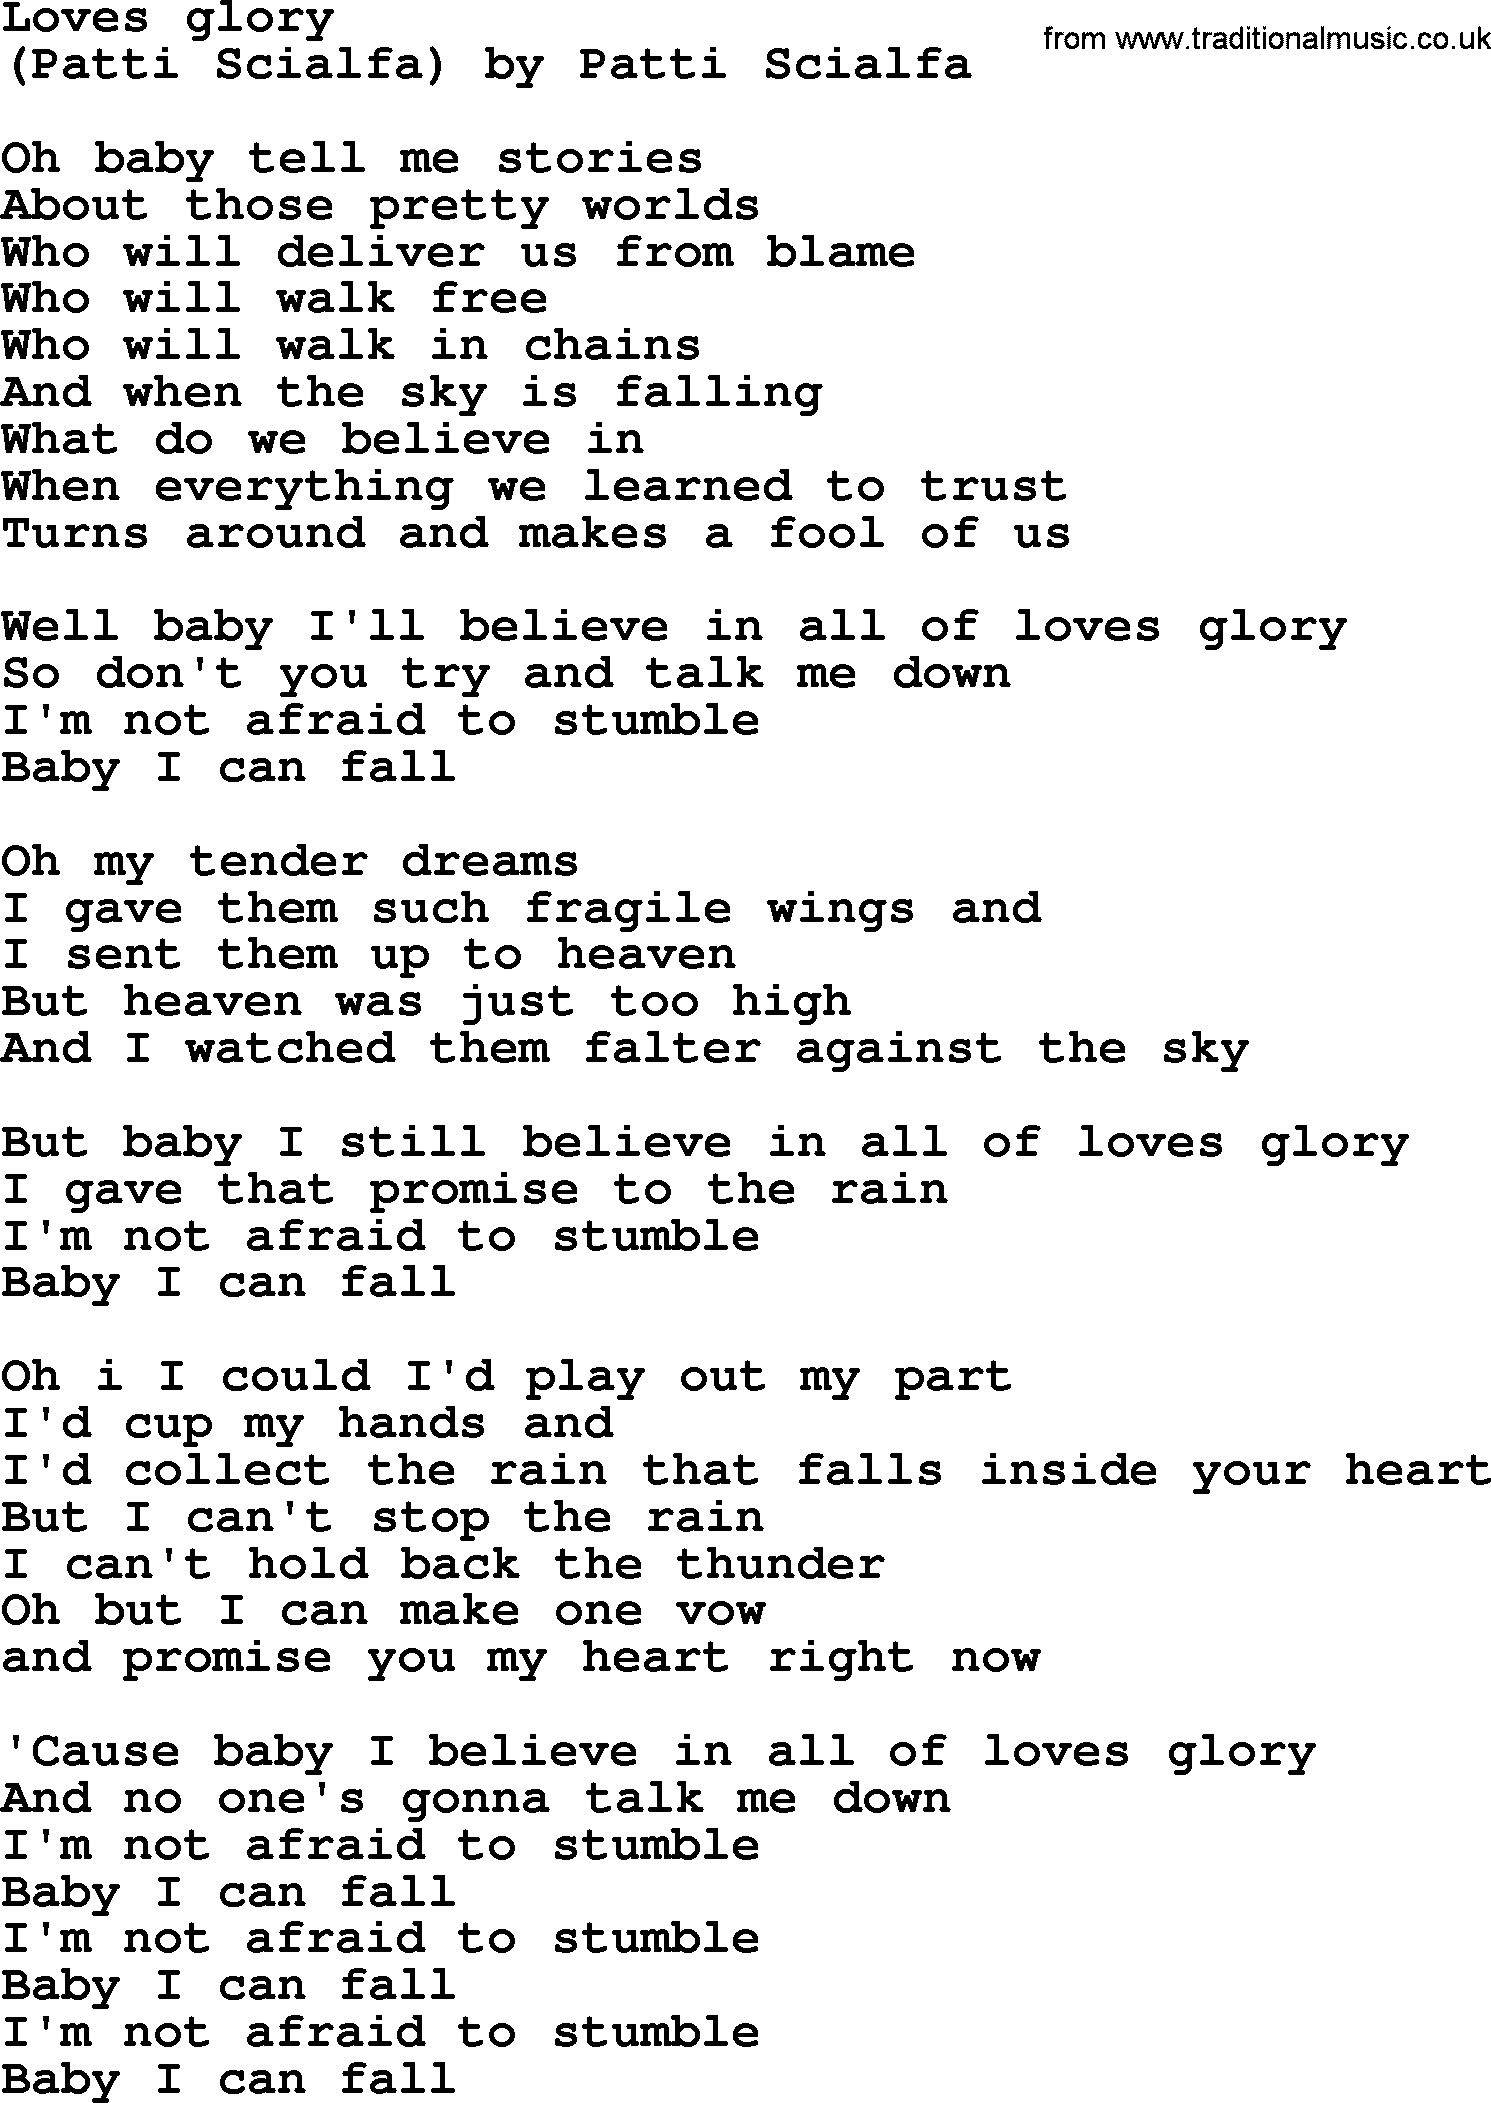 Bruce Springsteen song: Loves Glory lyrics